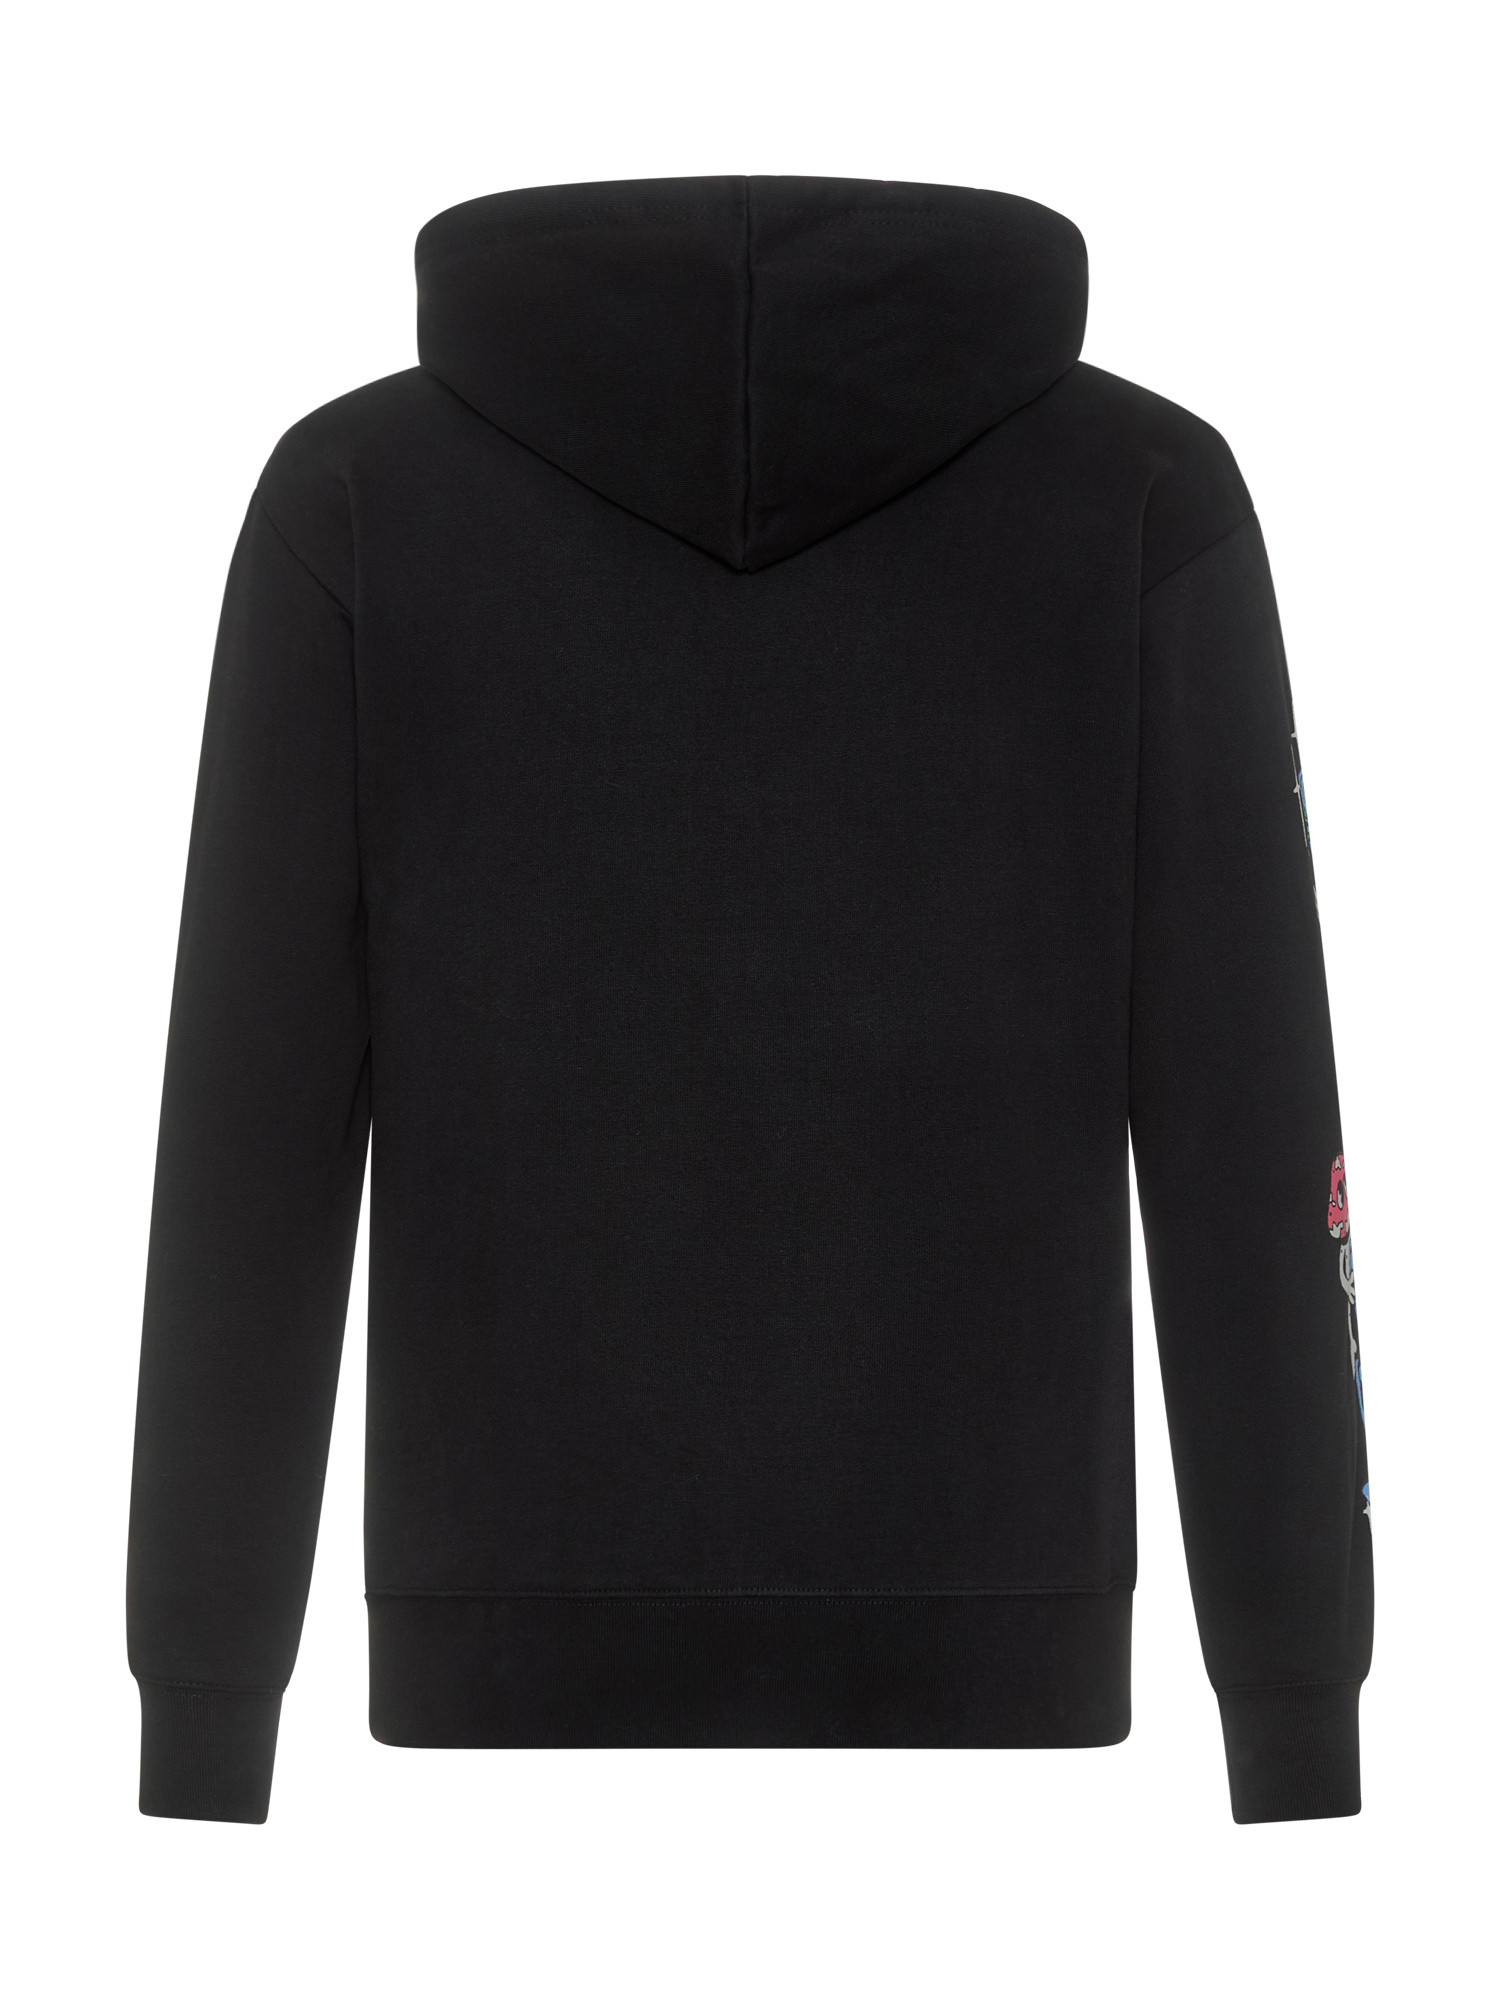 Market - Hooded sweatshirt with print, Black, large image number 1